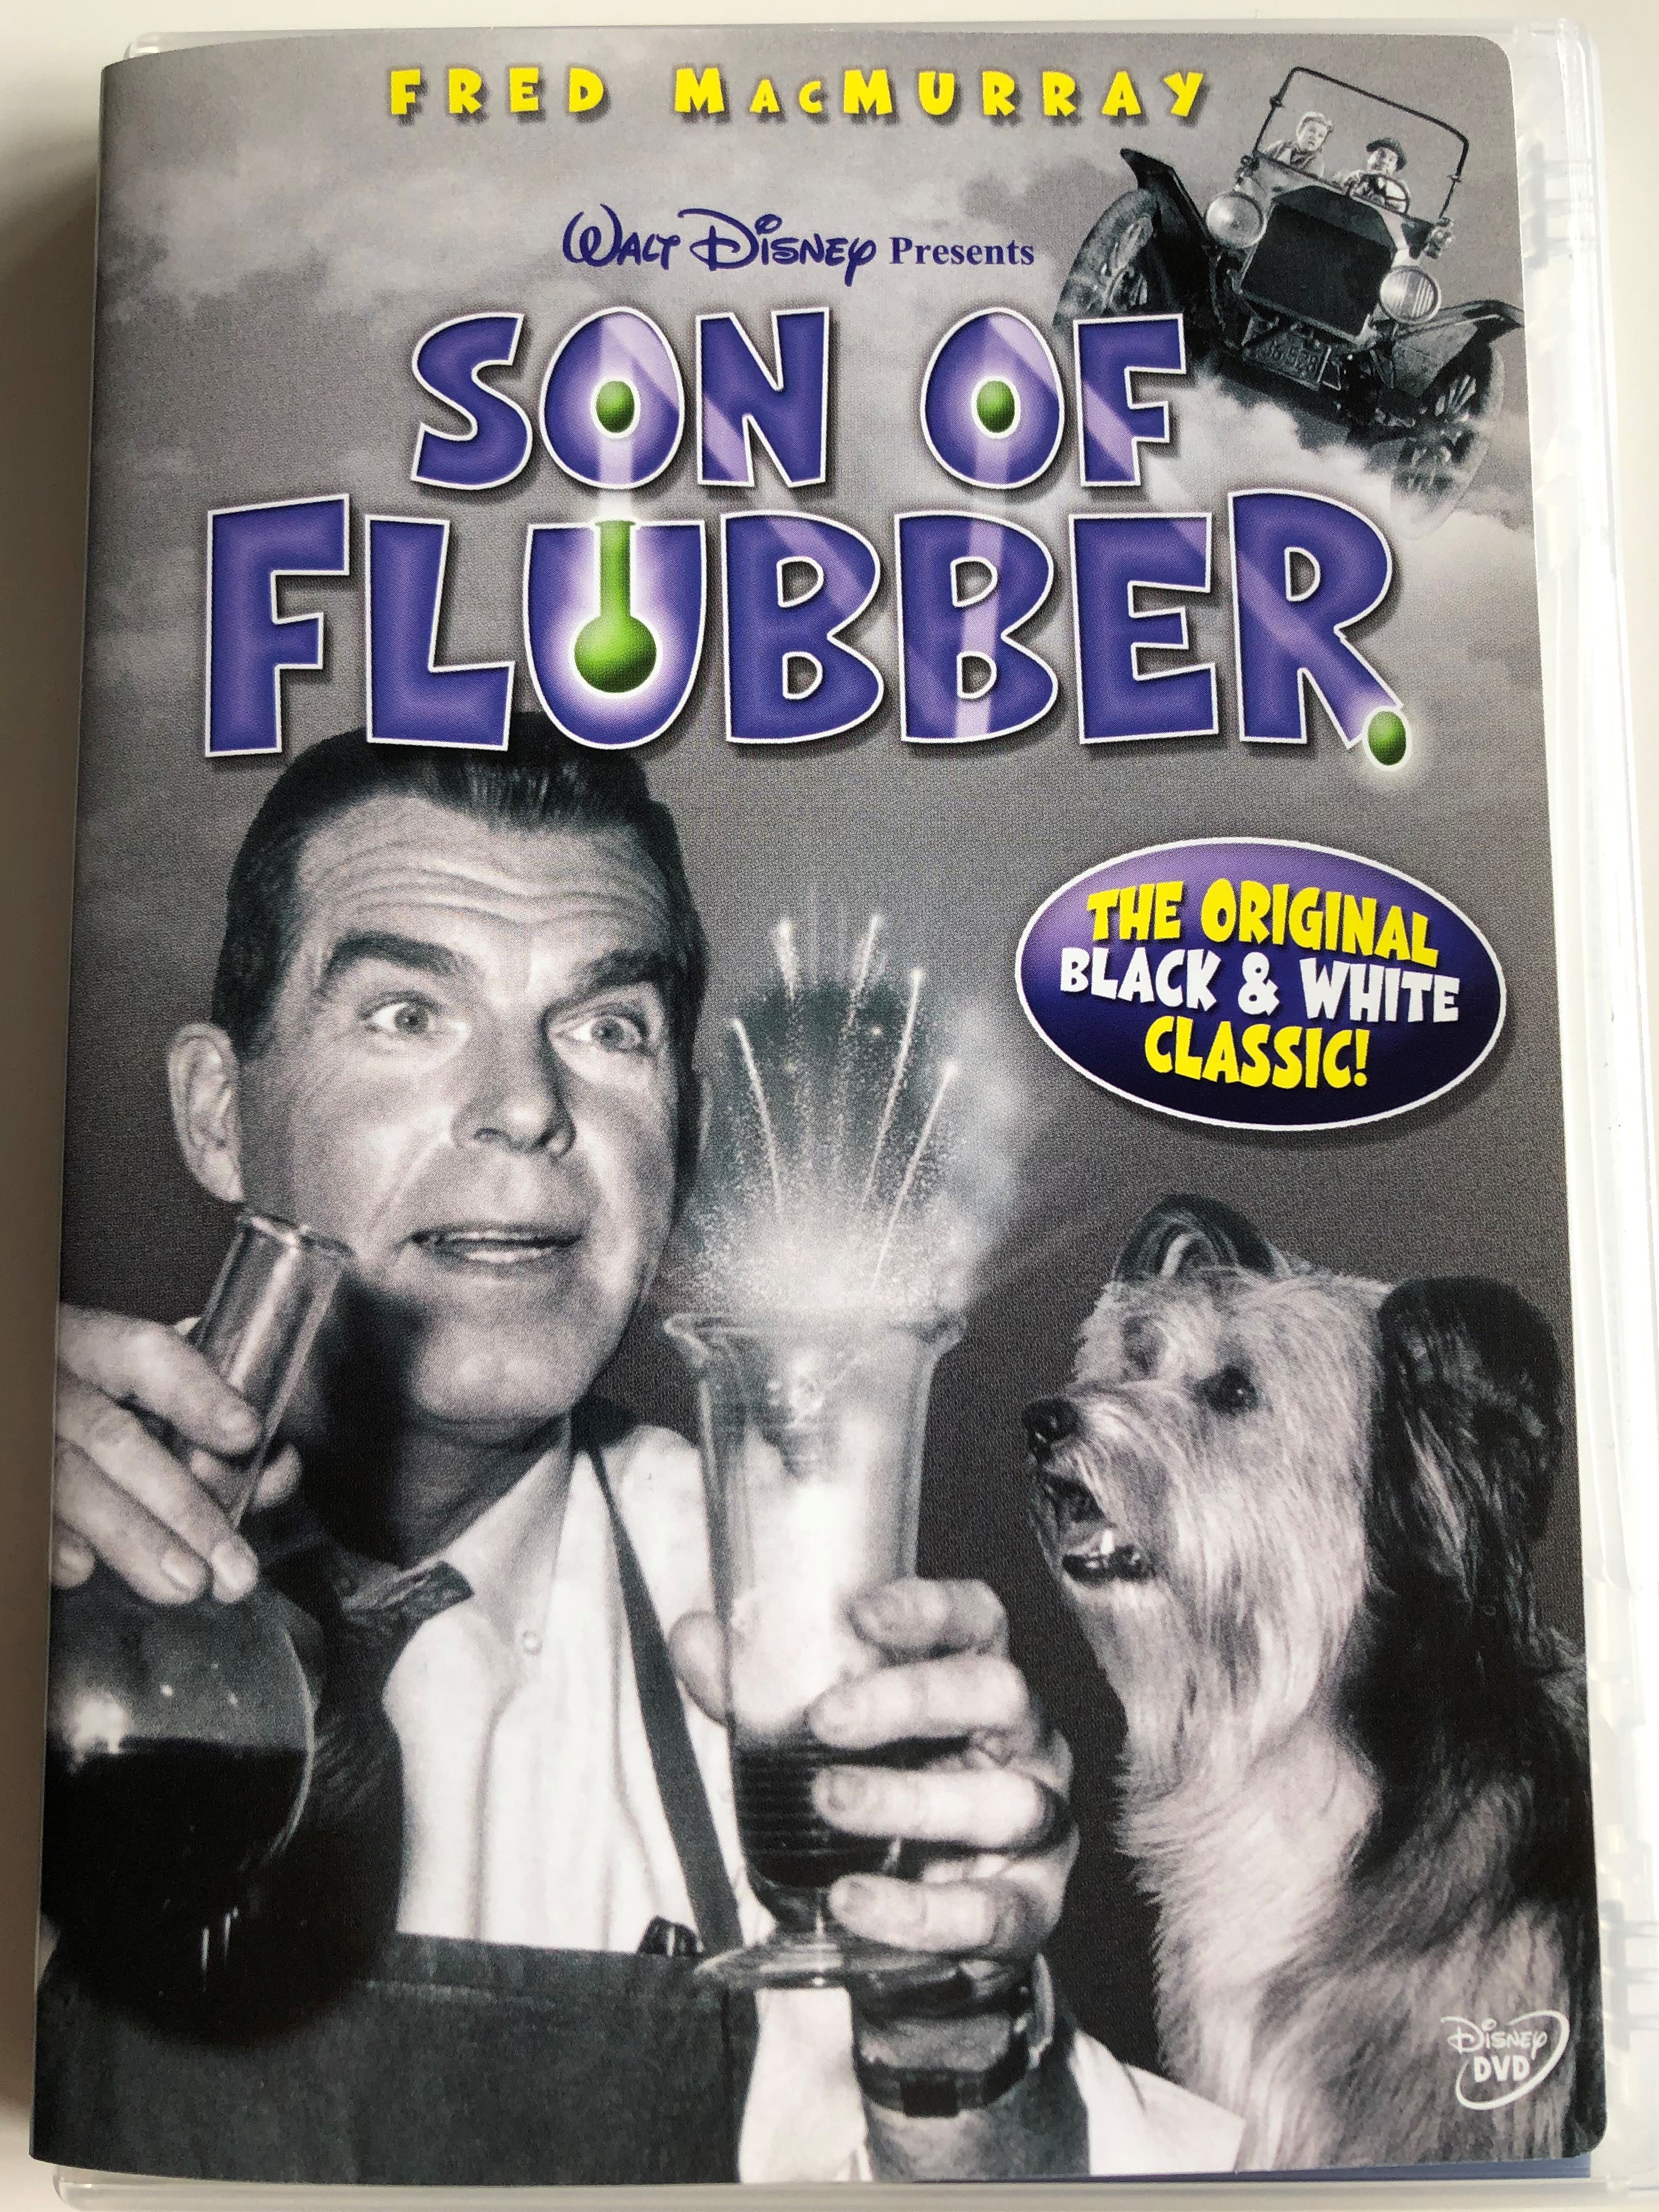 son-of-flubber-dvd-1963-directed-by-robert-stevenson-starring-fred-macmurray-nancy-olson-keenan-wynn-original-black-white-classic-1-.jpg